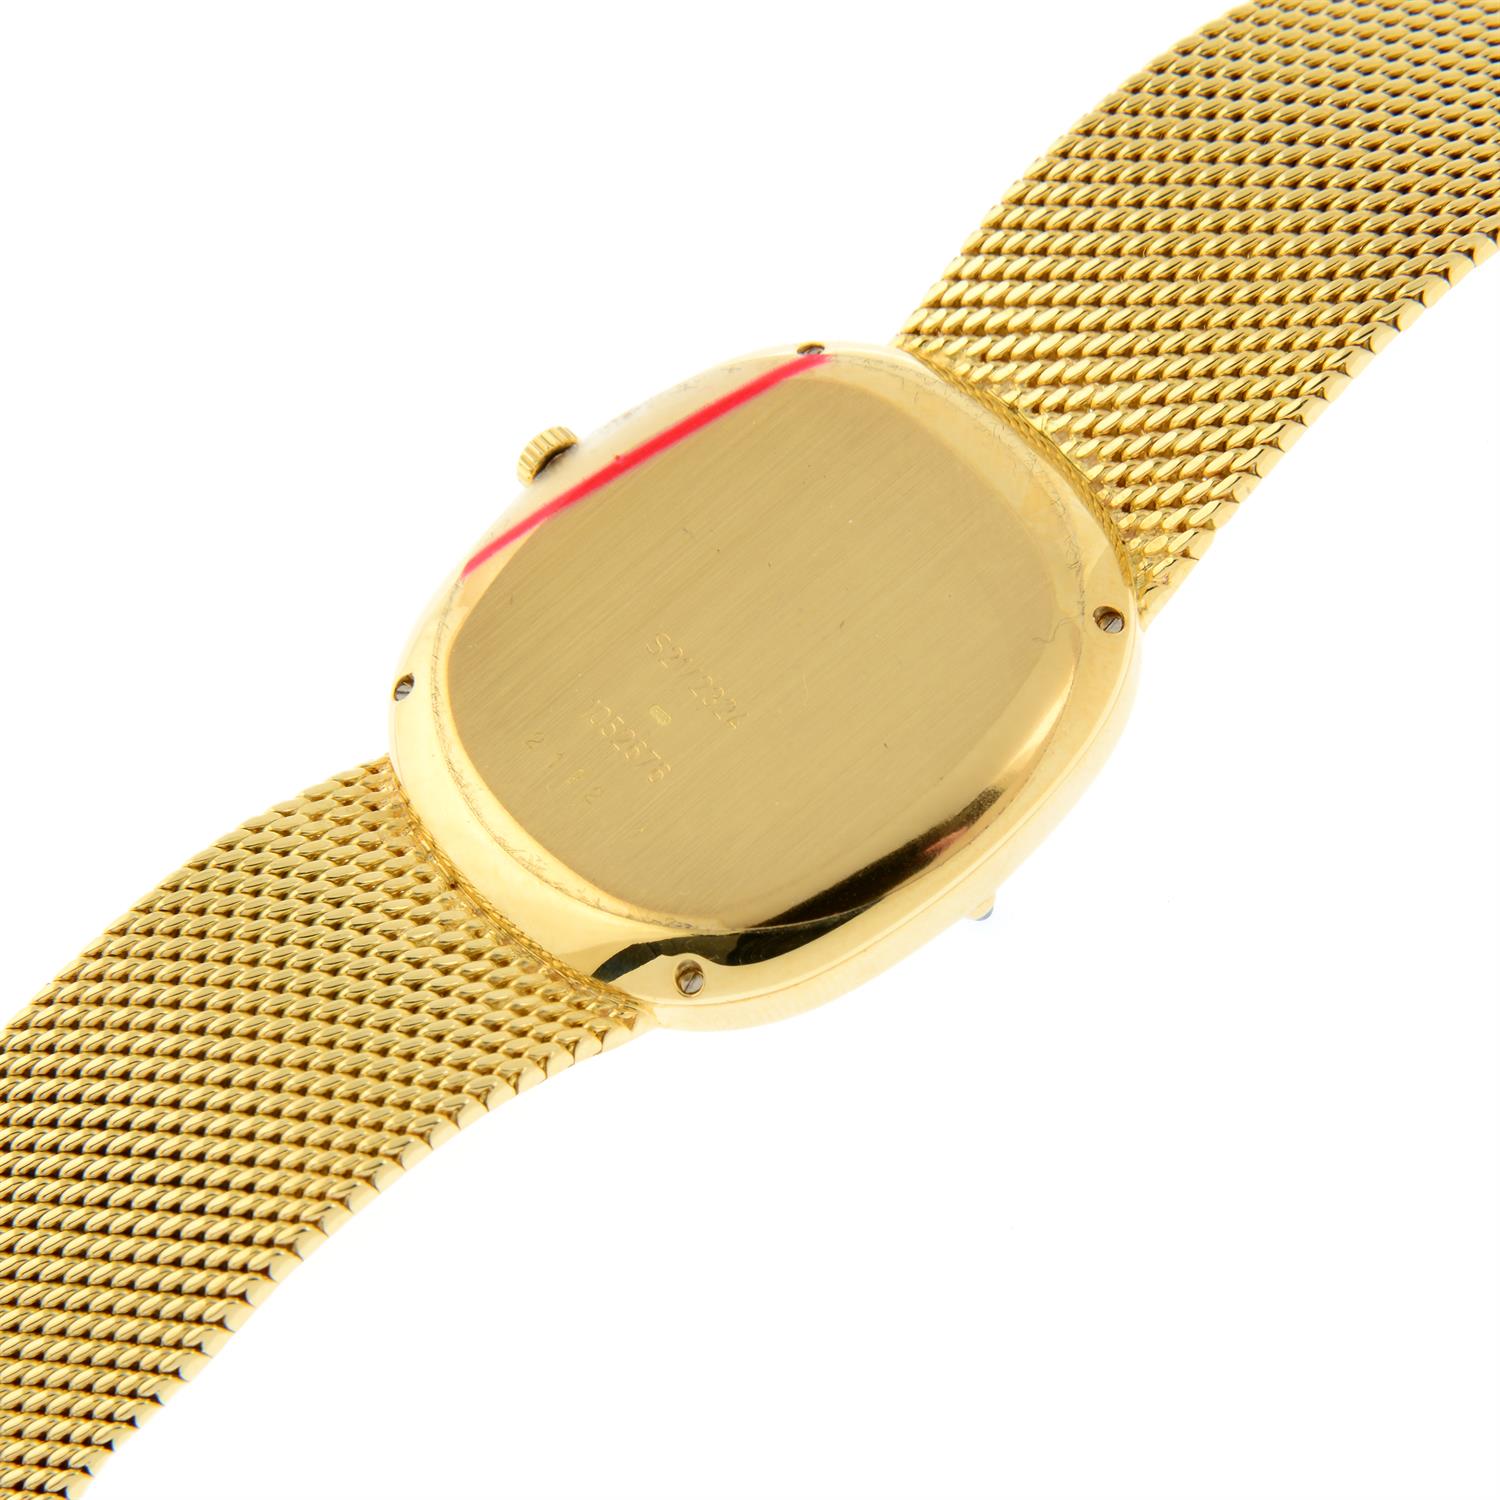 CHOPARD - a yellow metal diamond set bracelet watch, 30mm. - Image 4 of 5